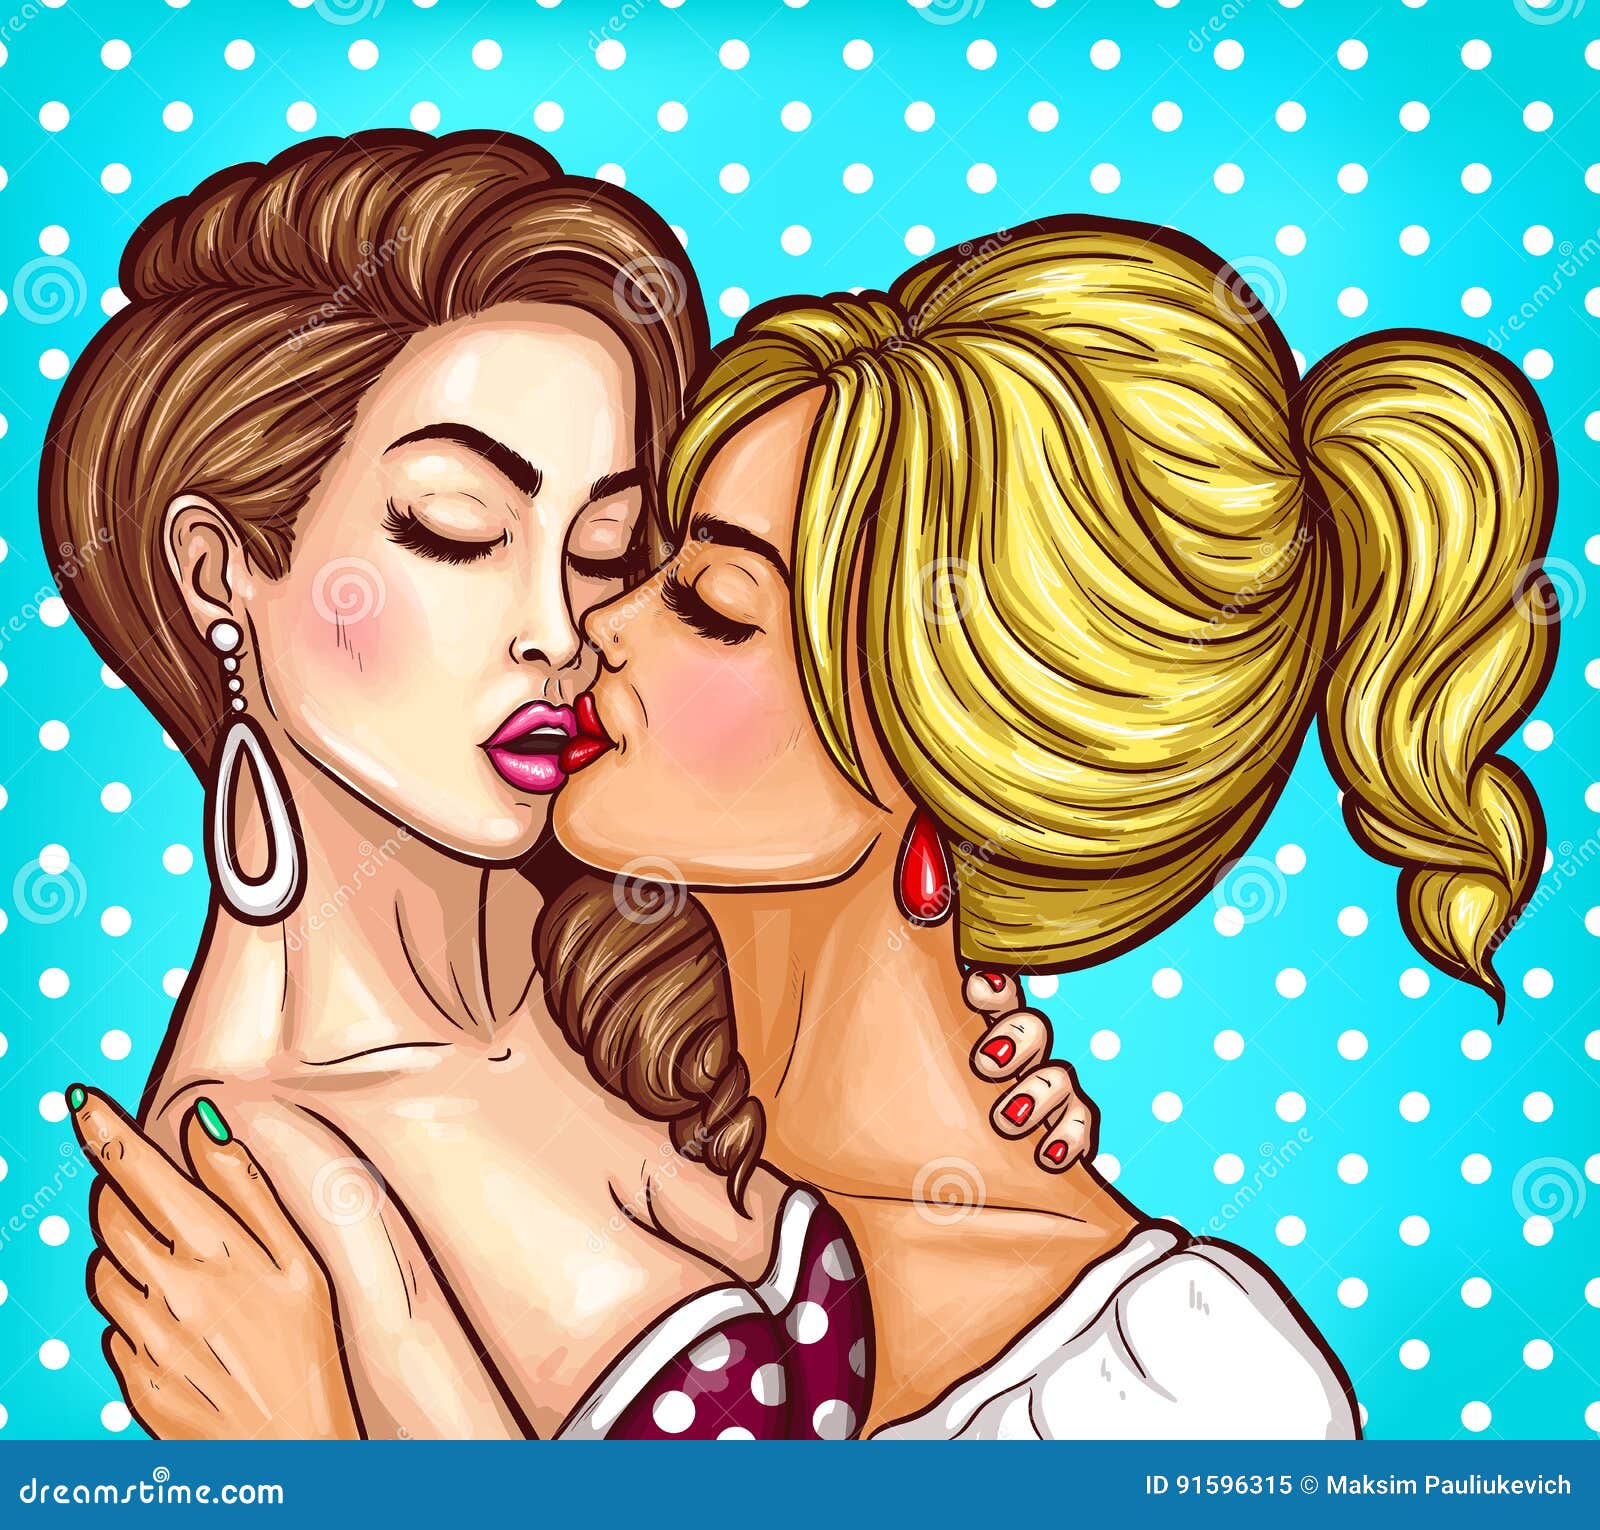 Lesbian Illustration 74